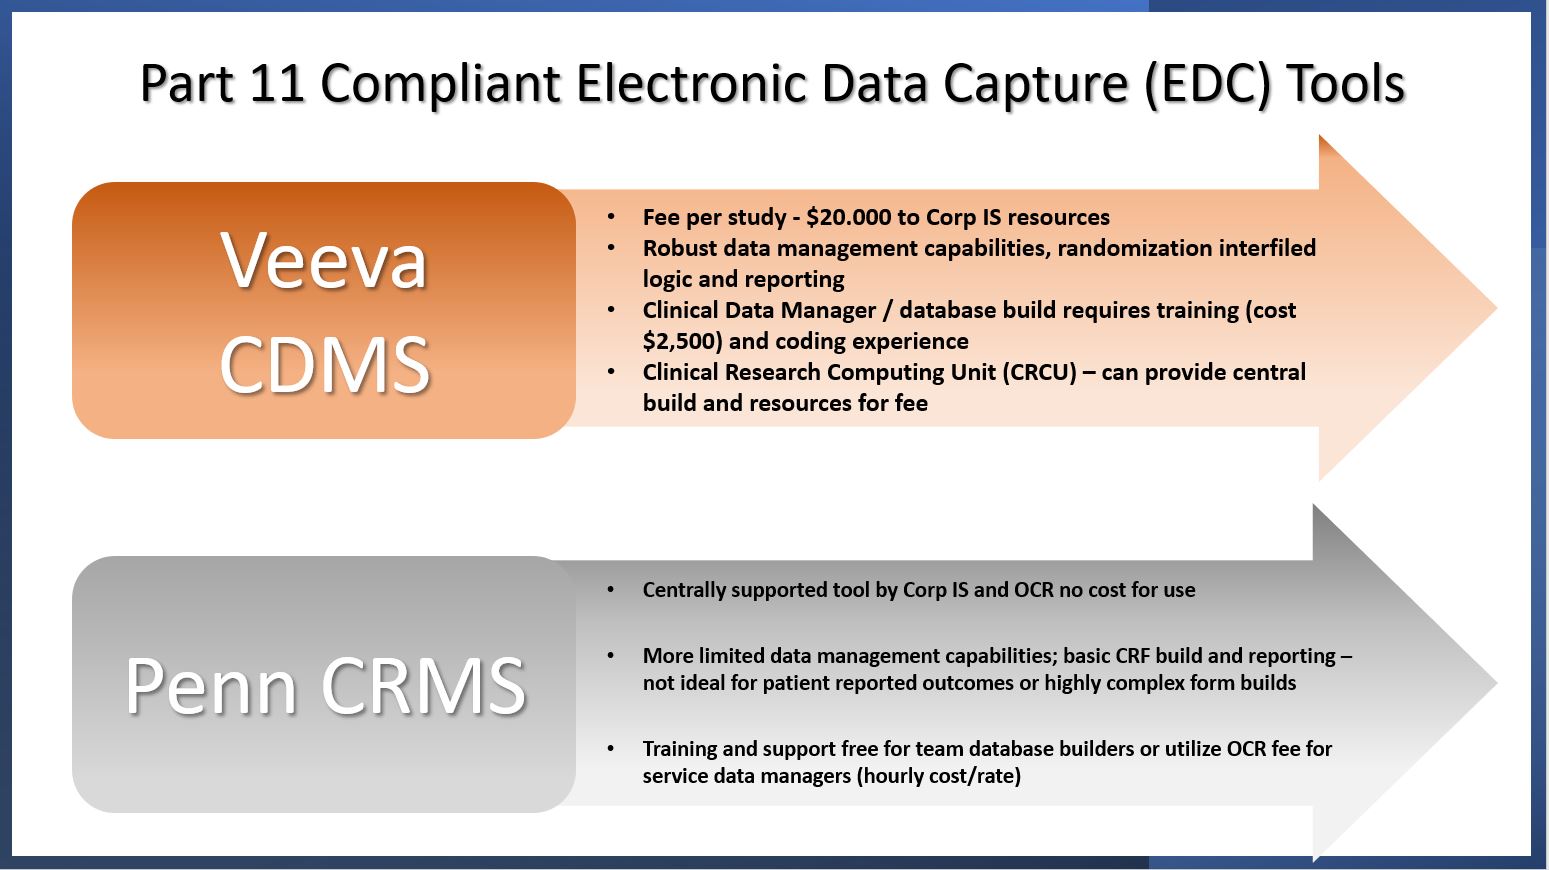 Part 11 Compliant Electronic Data Capture Tools